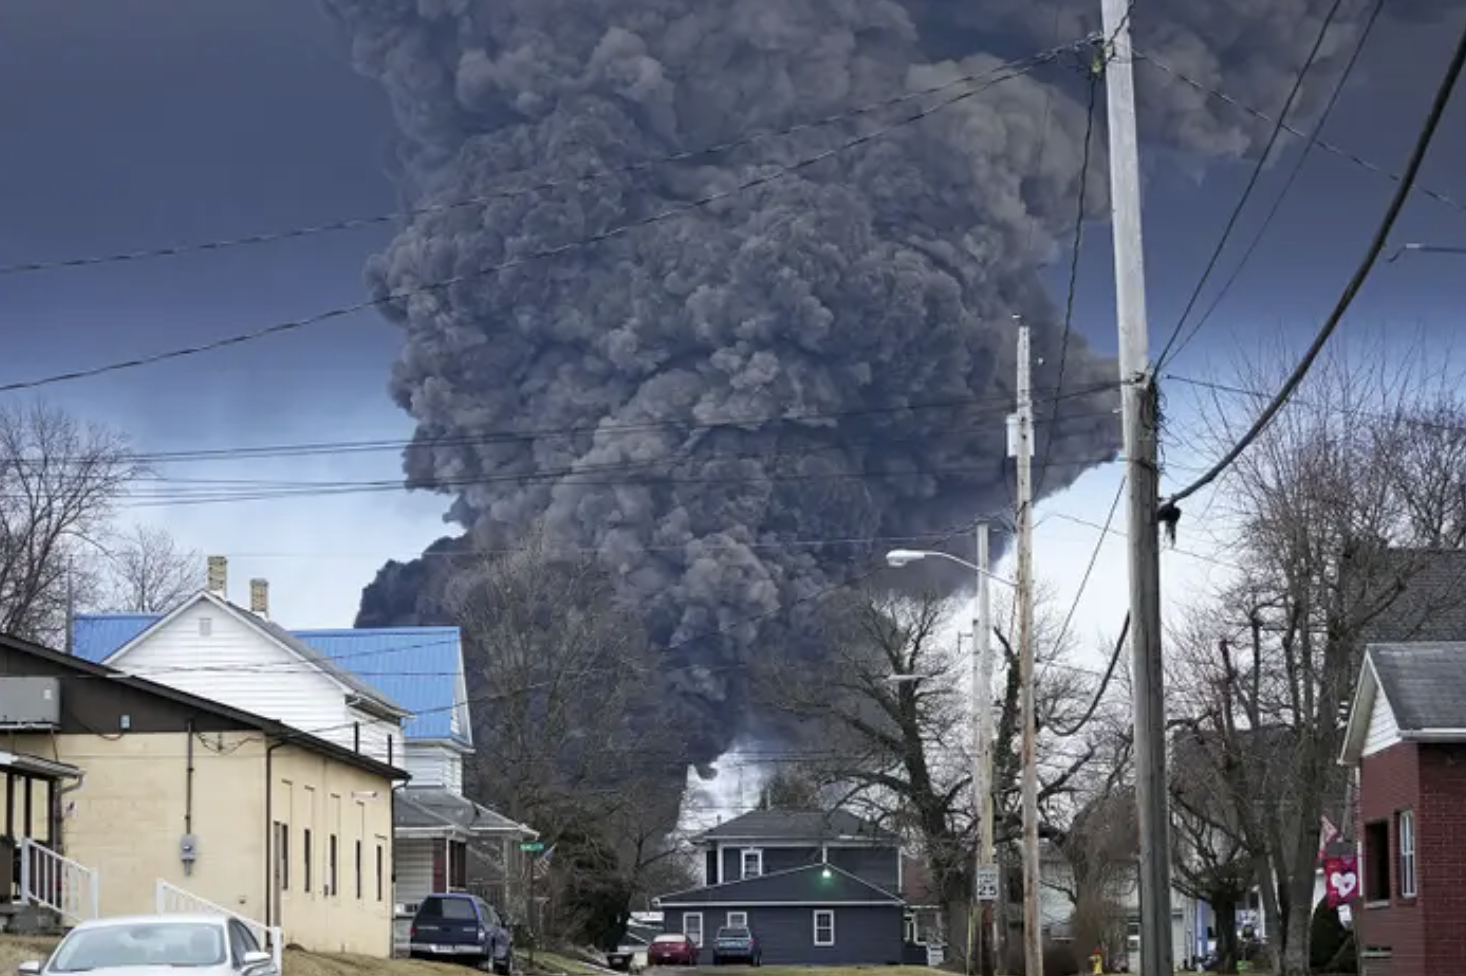 above a suburban neighborhood, a huge plume of black smoke rises